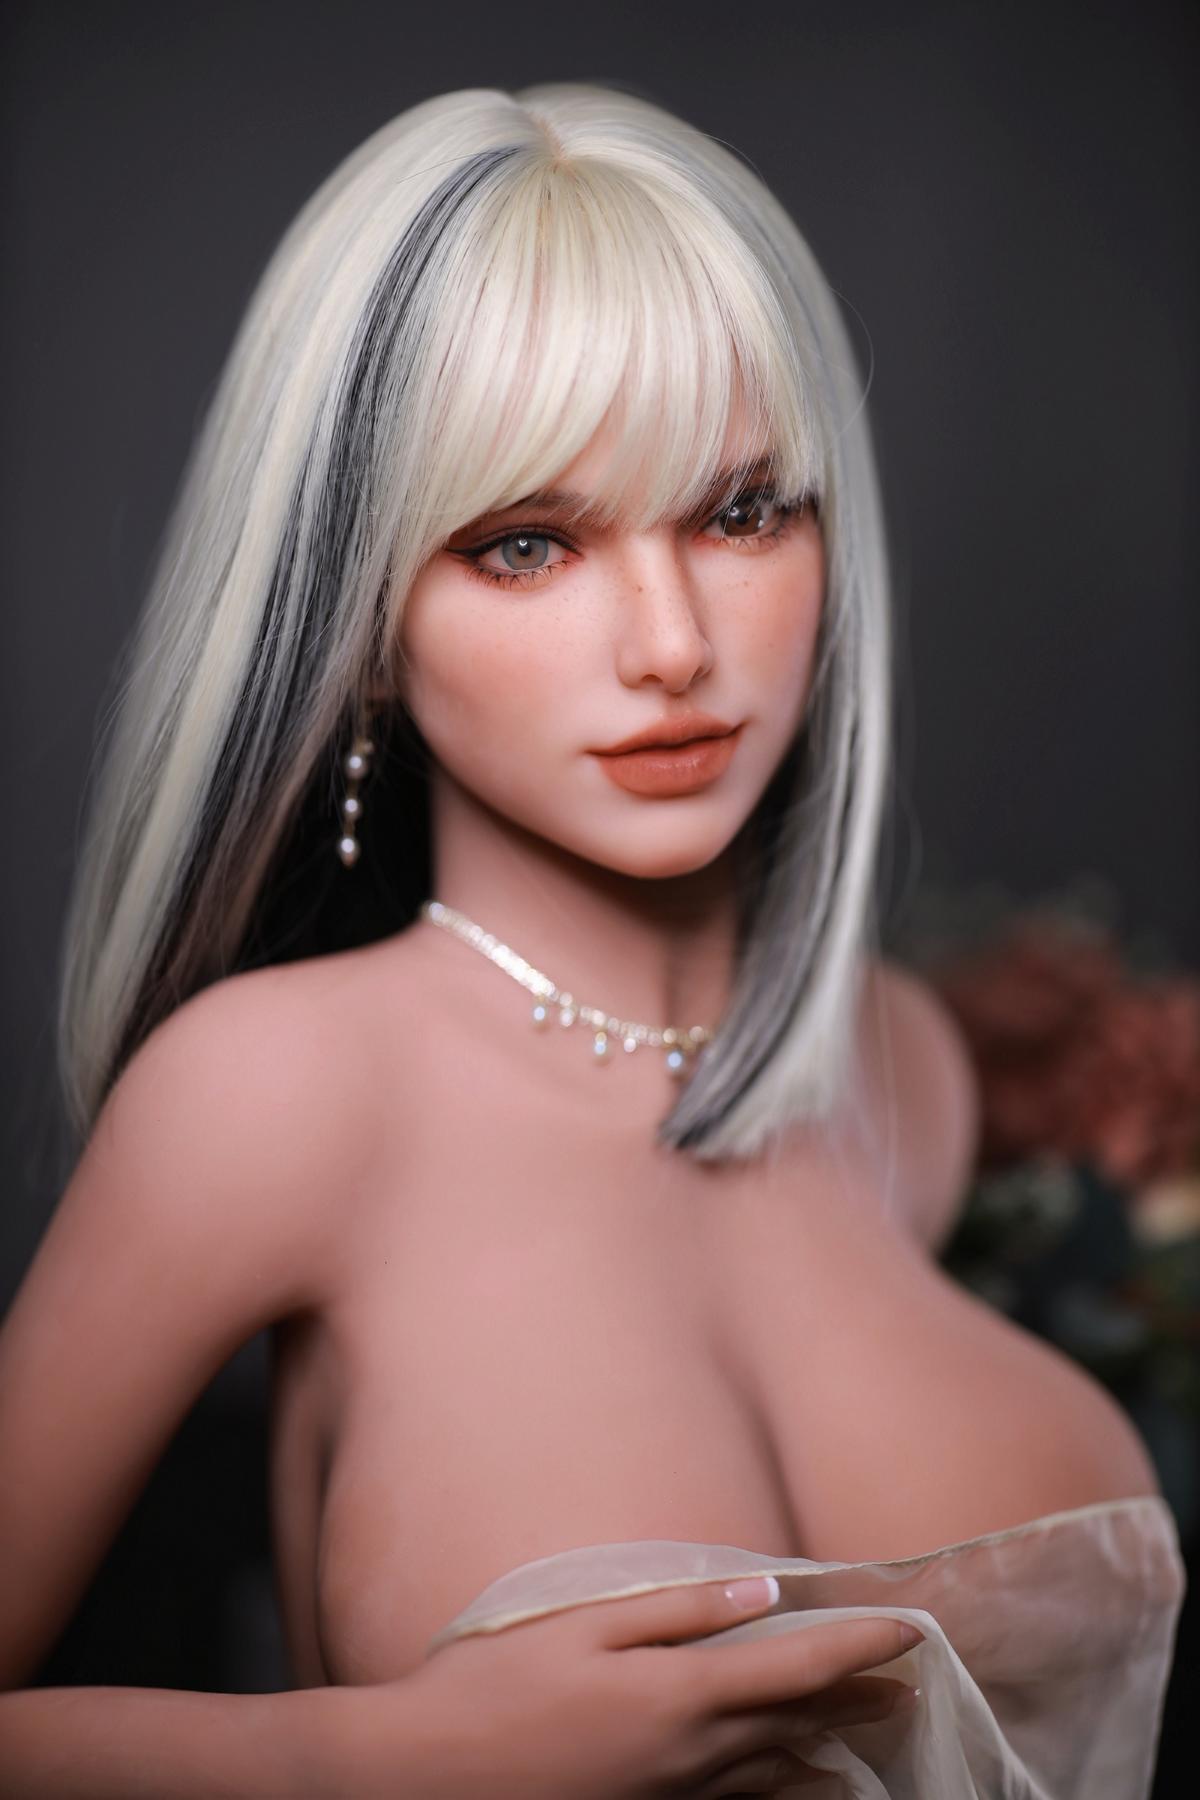 Günstige Sexdoll Holly | Bestseller Real Doll